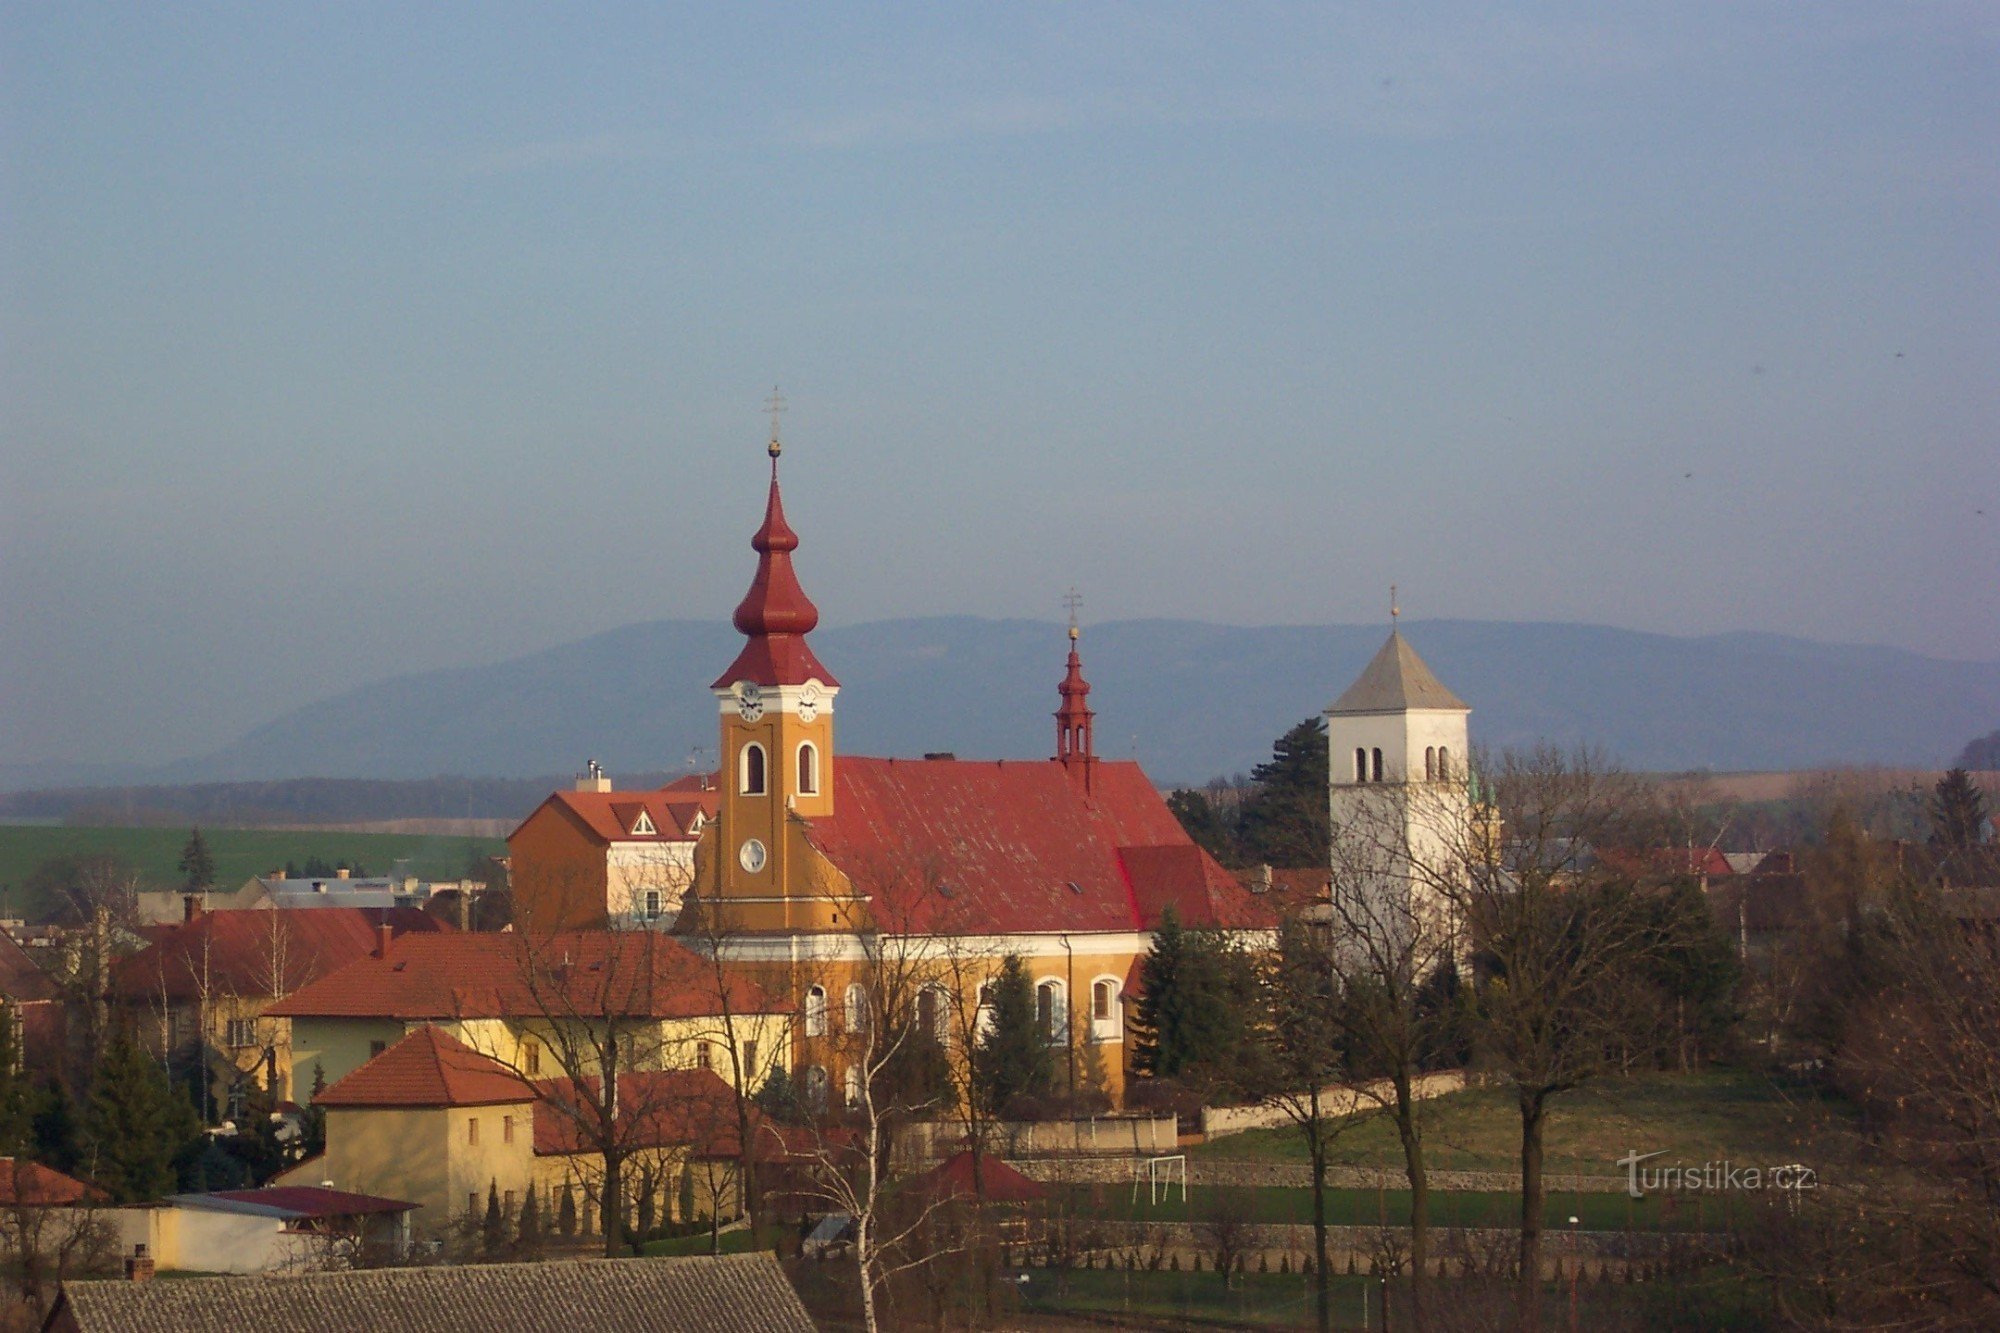 Chiesa di S. Havela Drevohostice